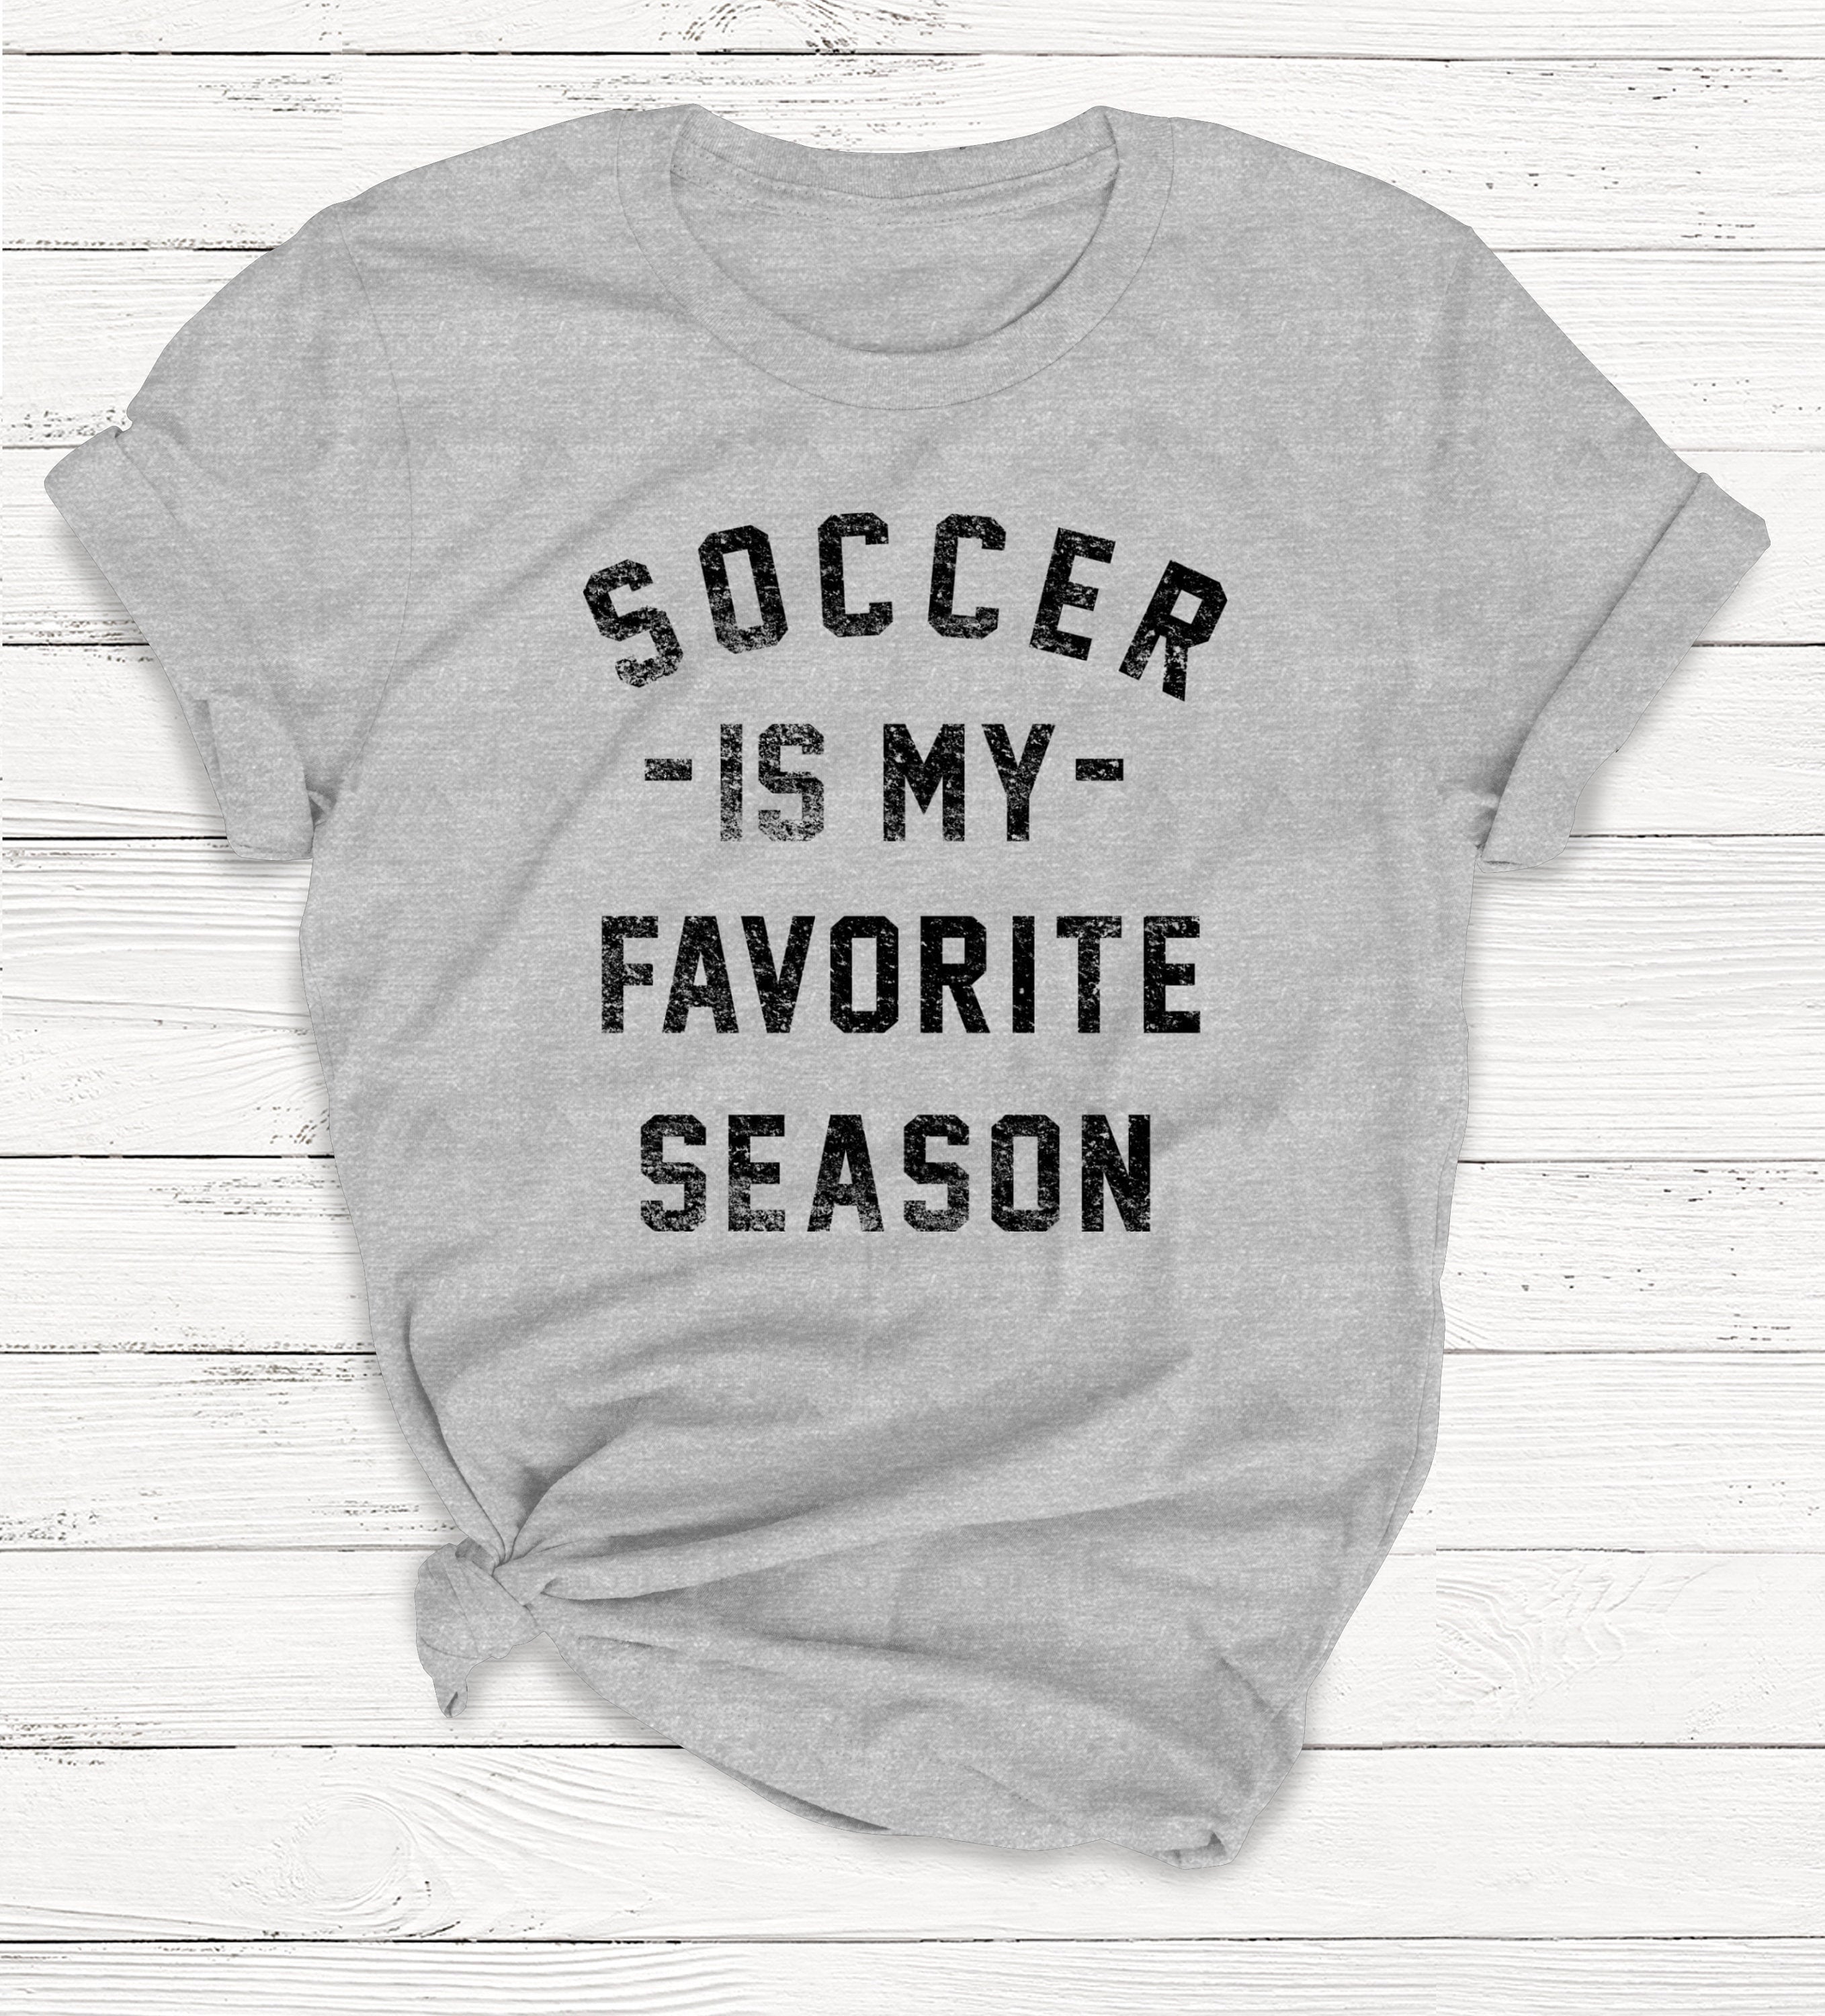 Stylish Novel Statement Shirt for Soccer Aficionados 